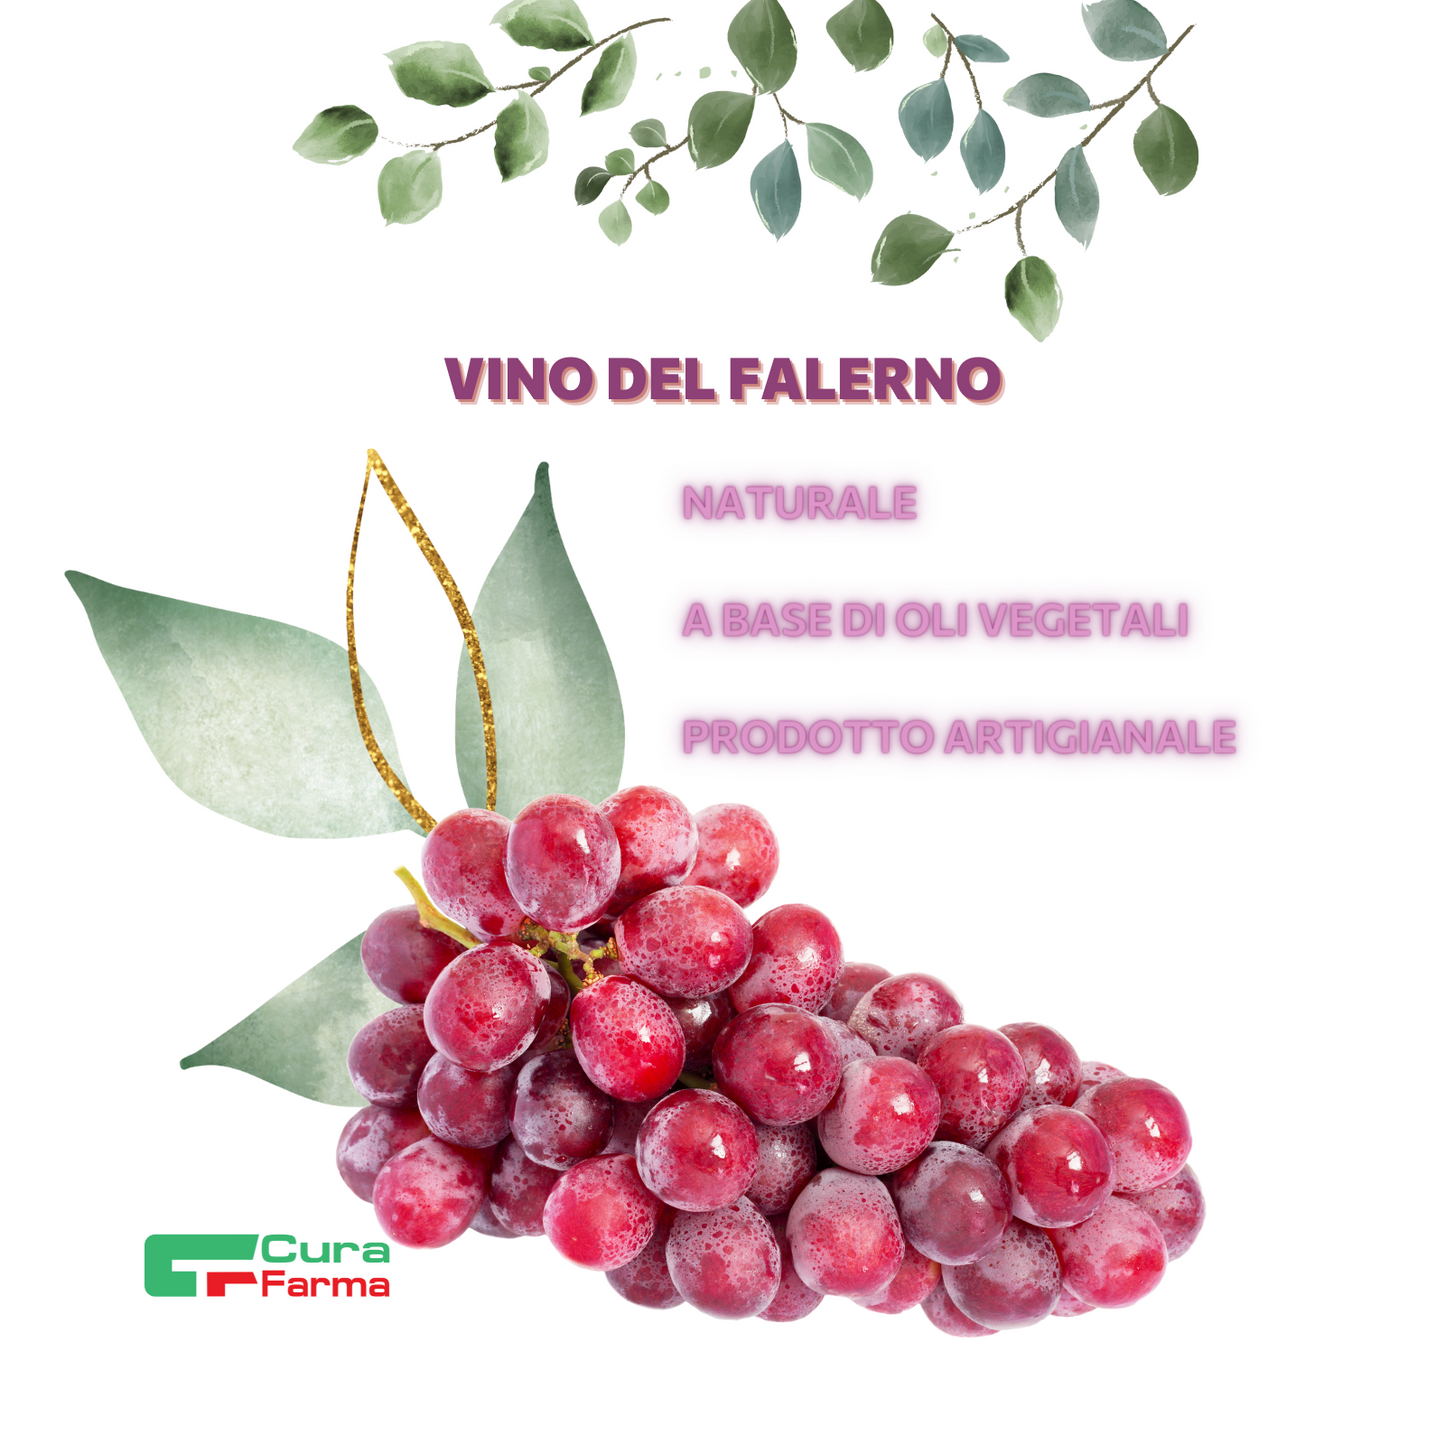 Sapone VINO FALERNO Naturale 3 SAPONETTE OLIO 100% Vegetale 3x150g Made in Italy